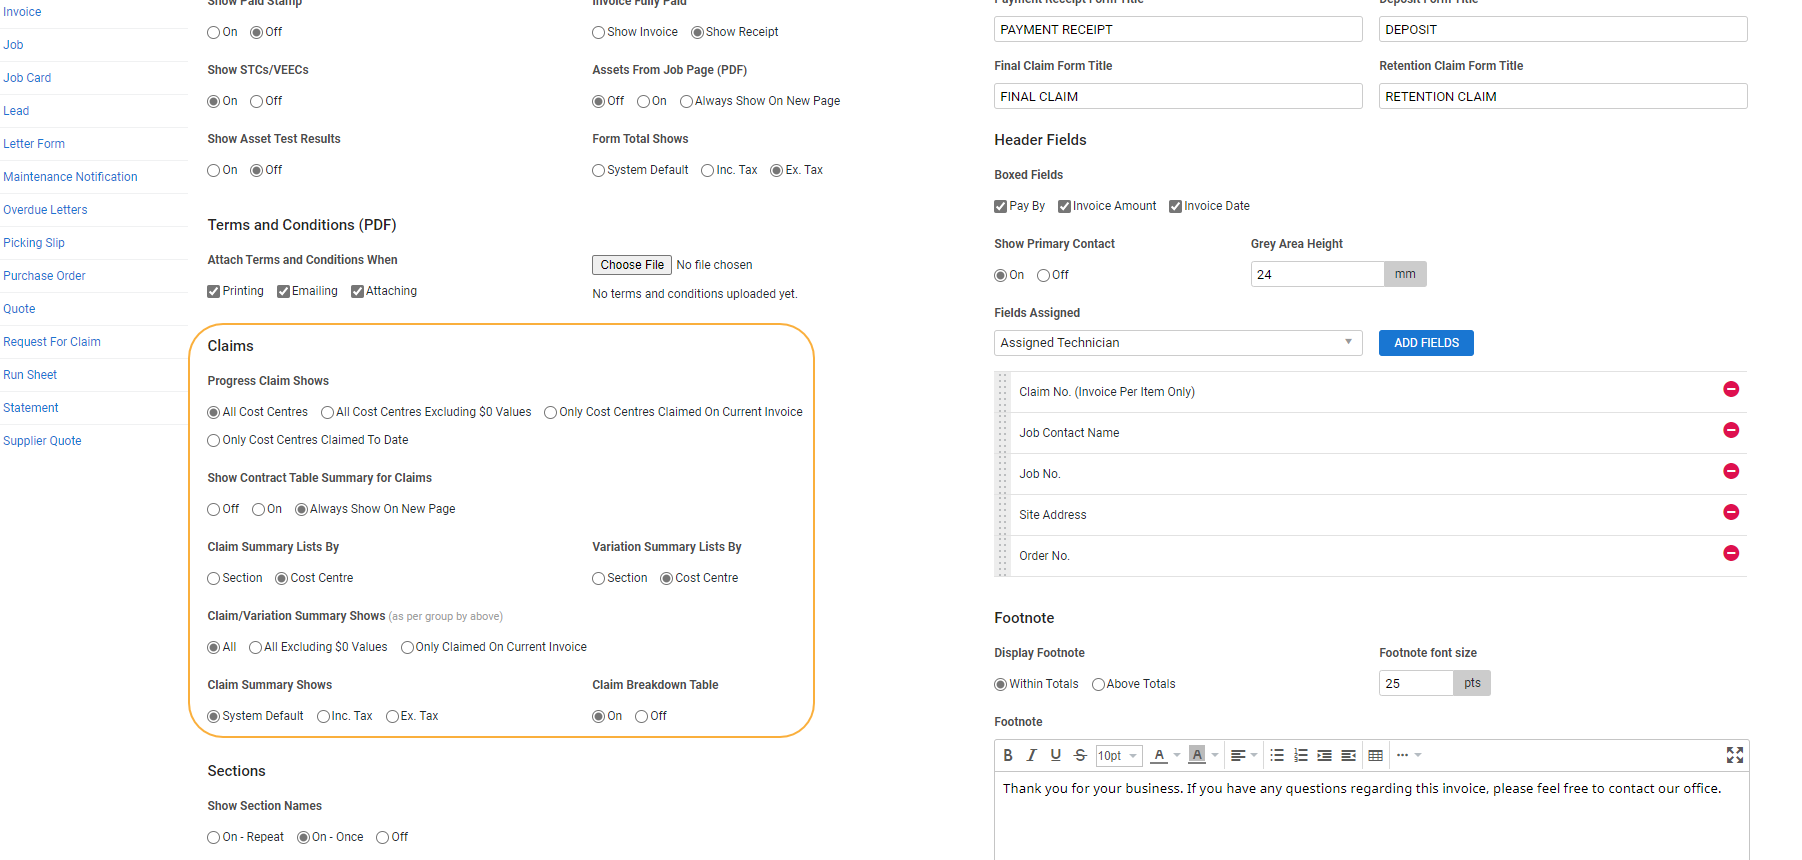 A screenshot of the Claim forms setup options.